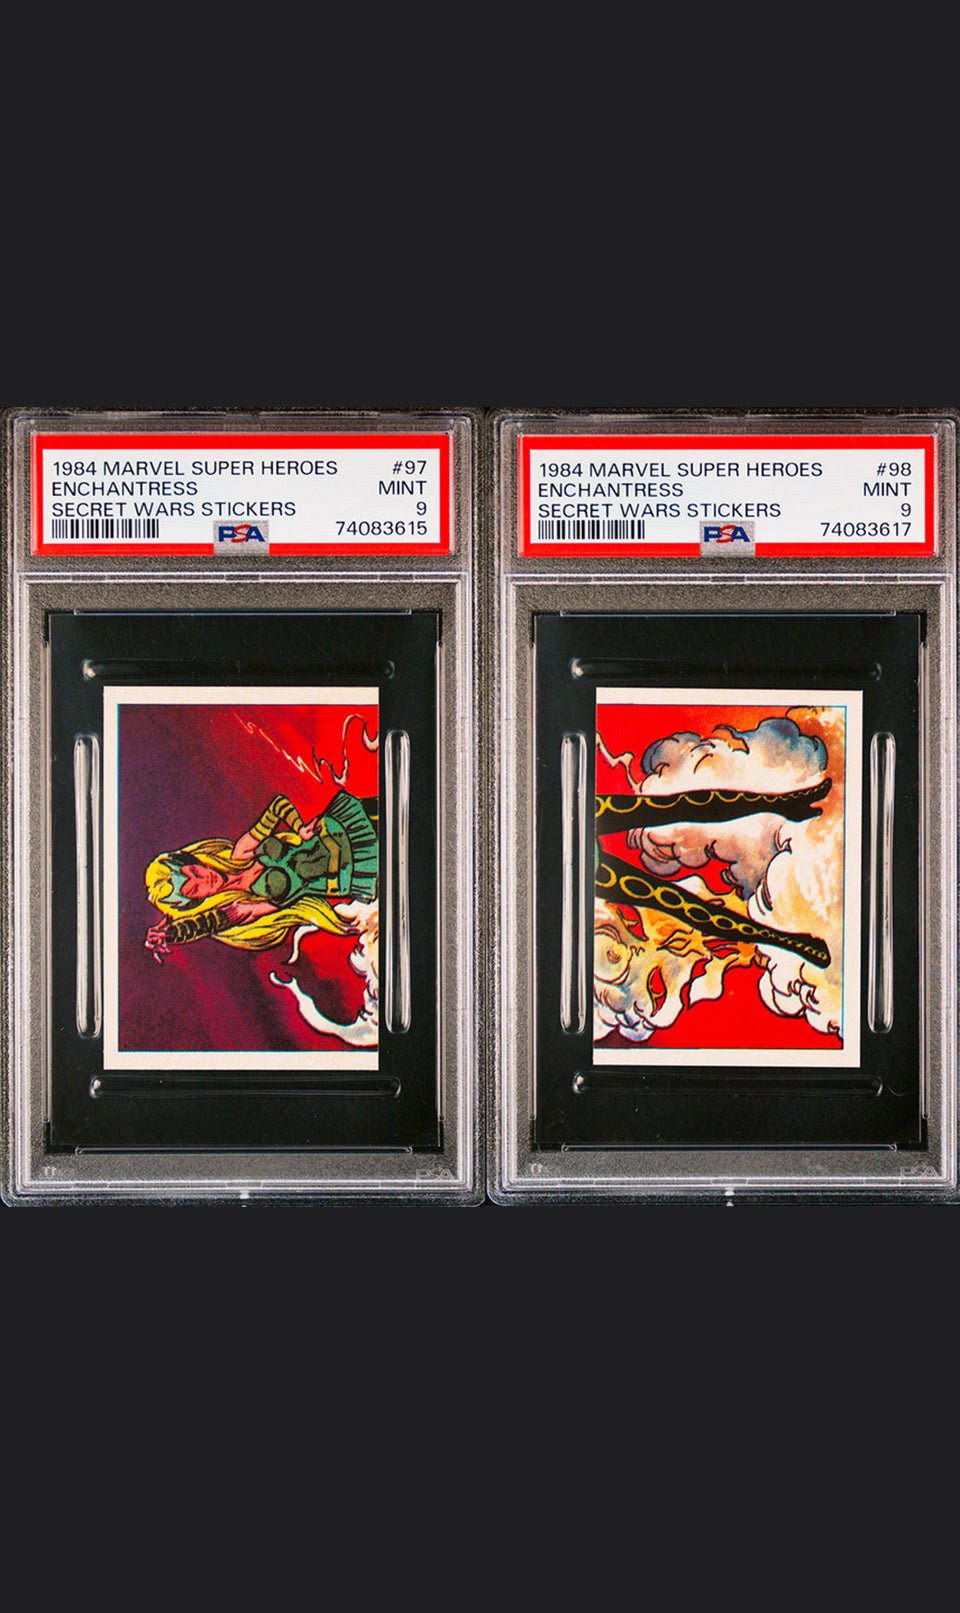 ENCHANTRESS PSA 9 1984 Marvel Super Heroes Secret Wars Stickers #97 #98 Marvel Graded Cards Sticker - Hobby Gems